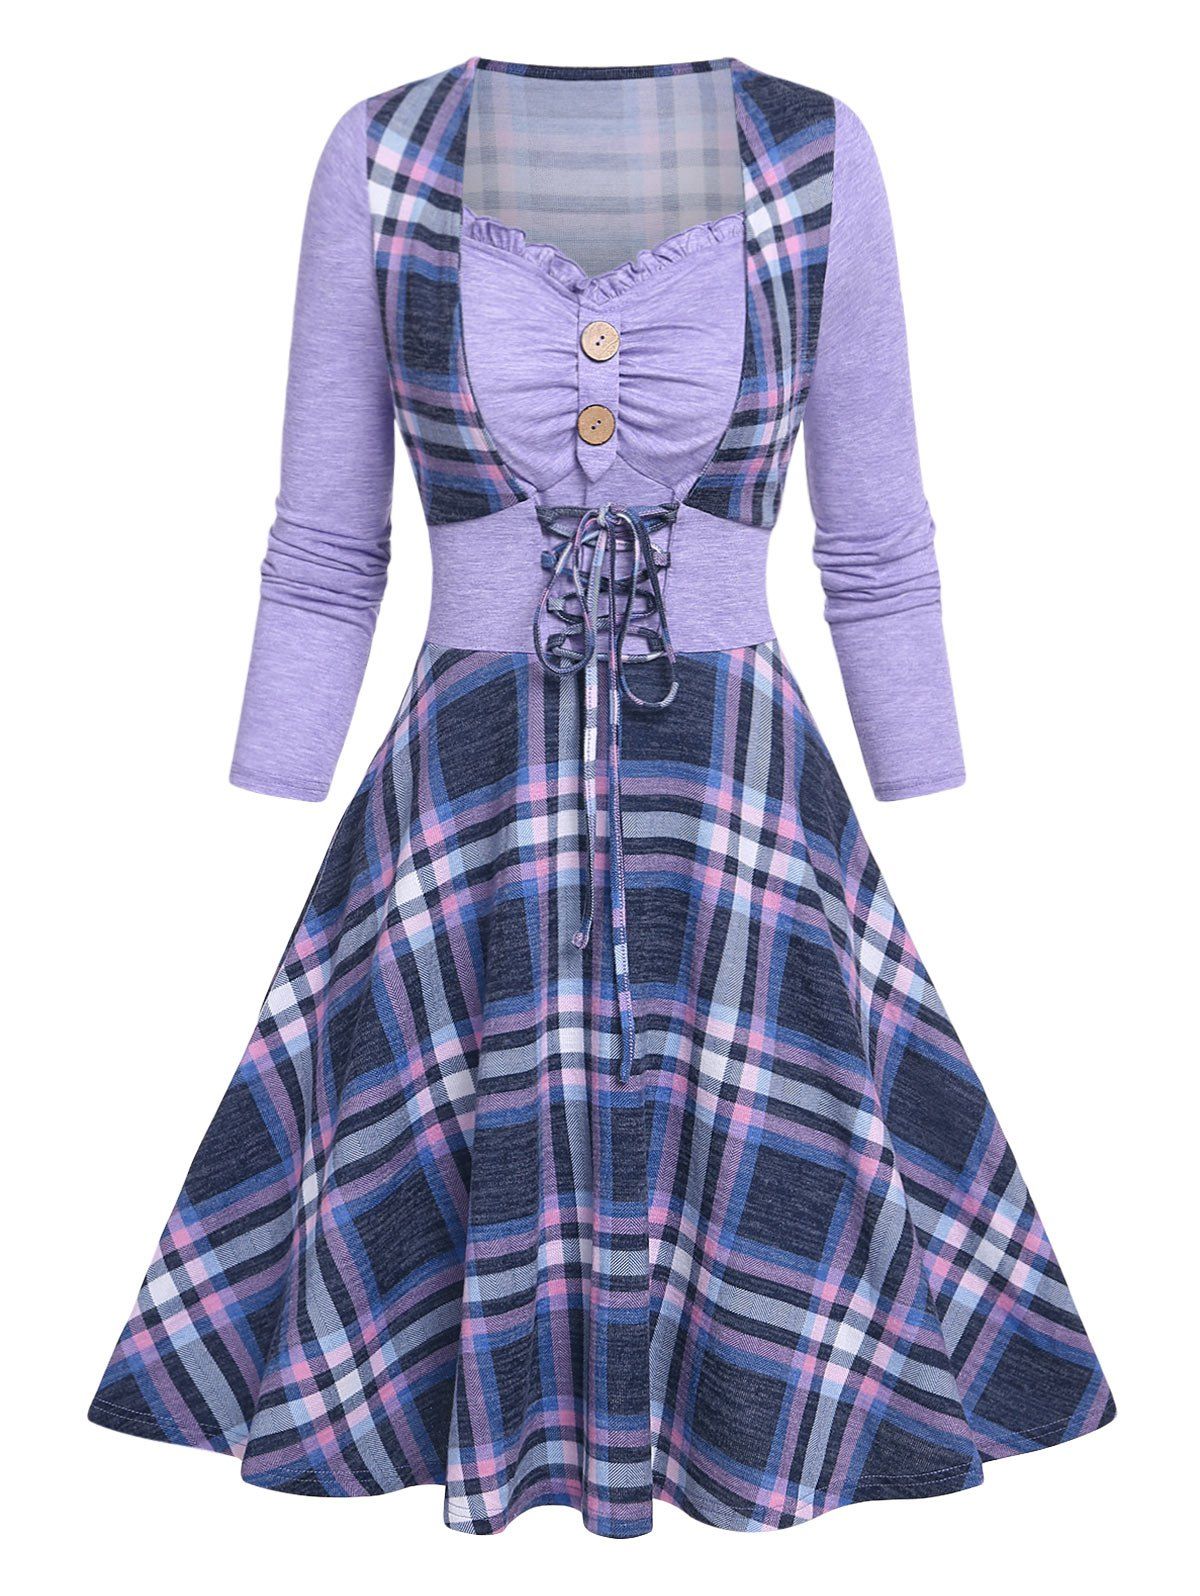 Plaid Print Lace-up Faux Twinset Flare Dress - LIGHT PURPLE XXL